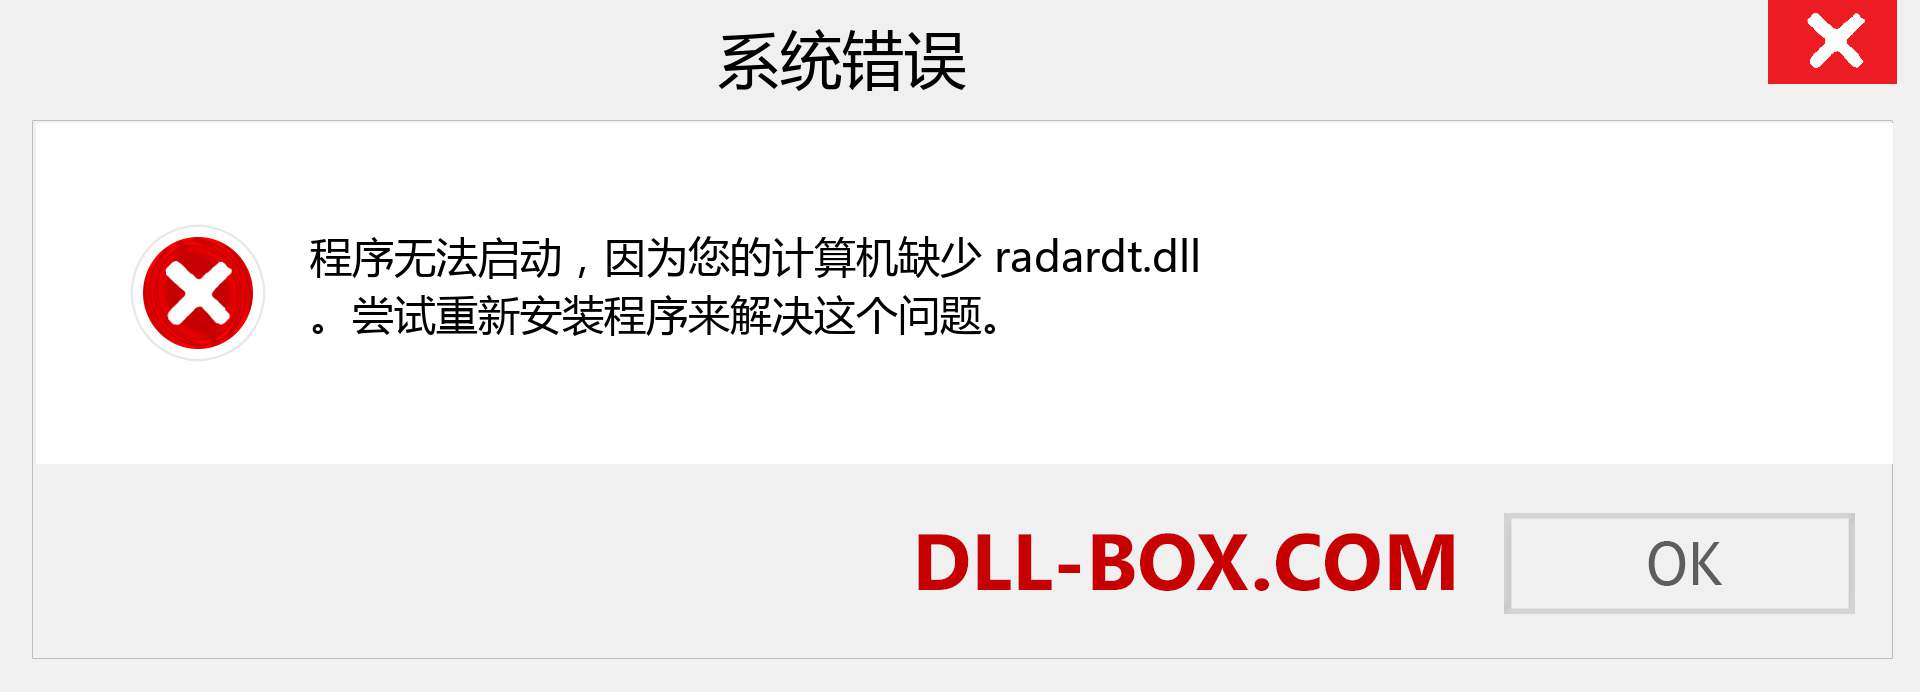 radardt.dll 文件丢失？。 适用于 Windows 7、8、10 的下载 - 修复 Windows、照片、图像上的 radardt dll 丢失错误